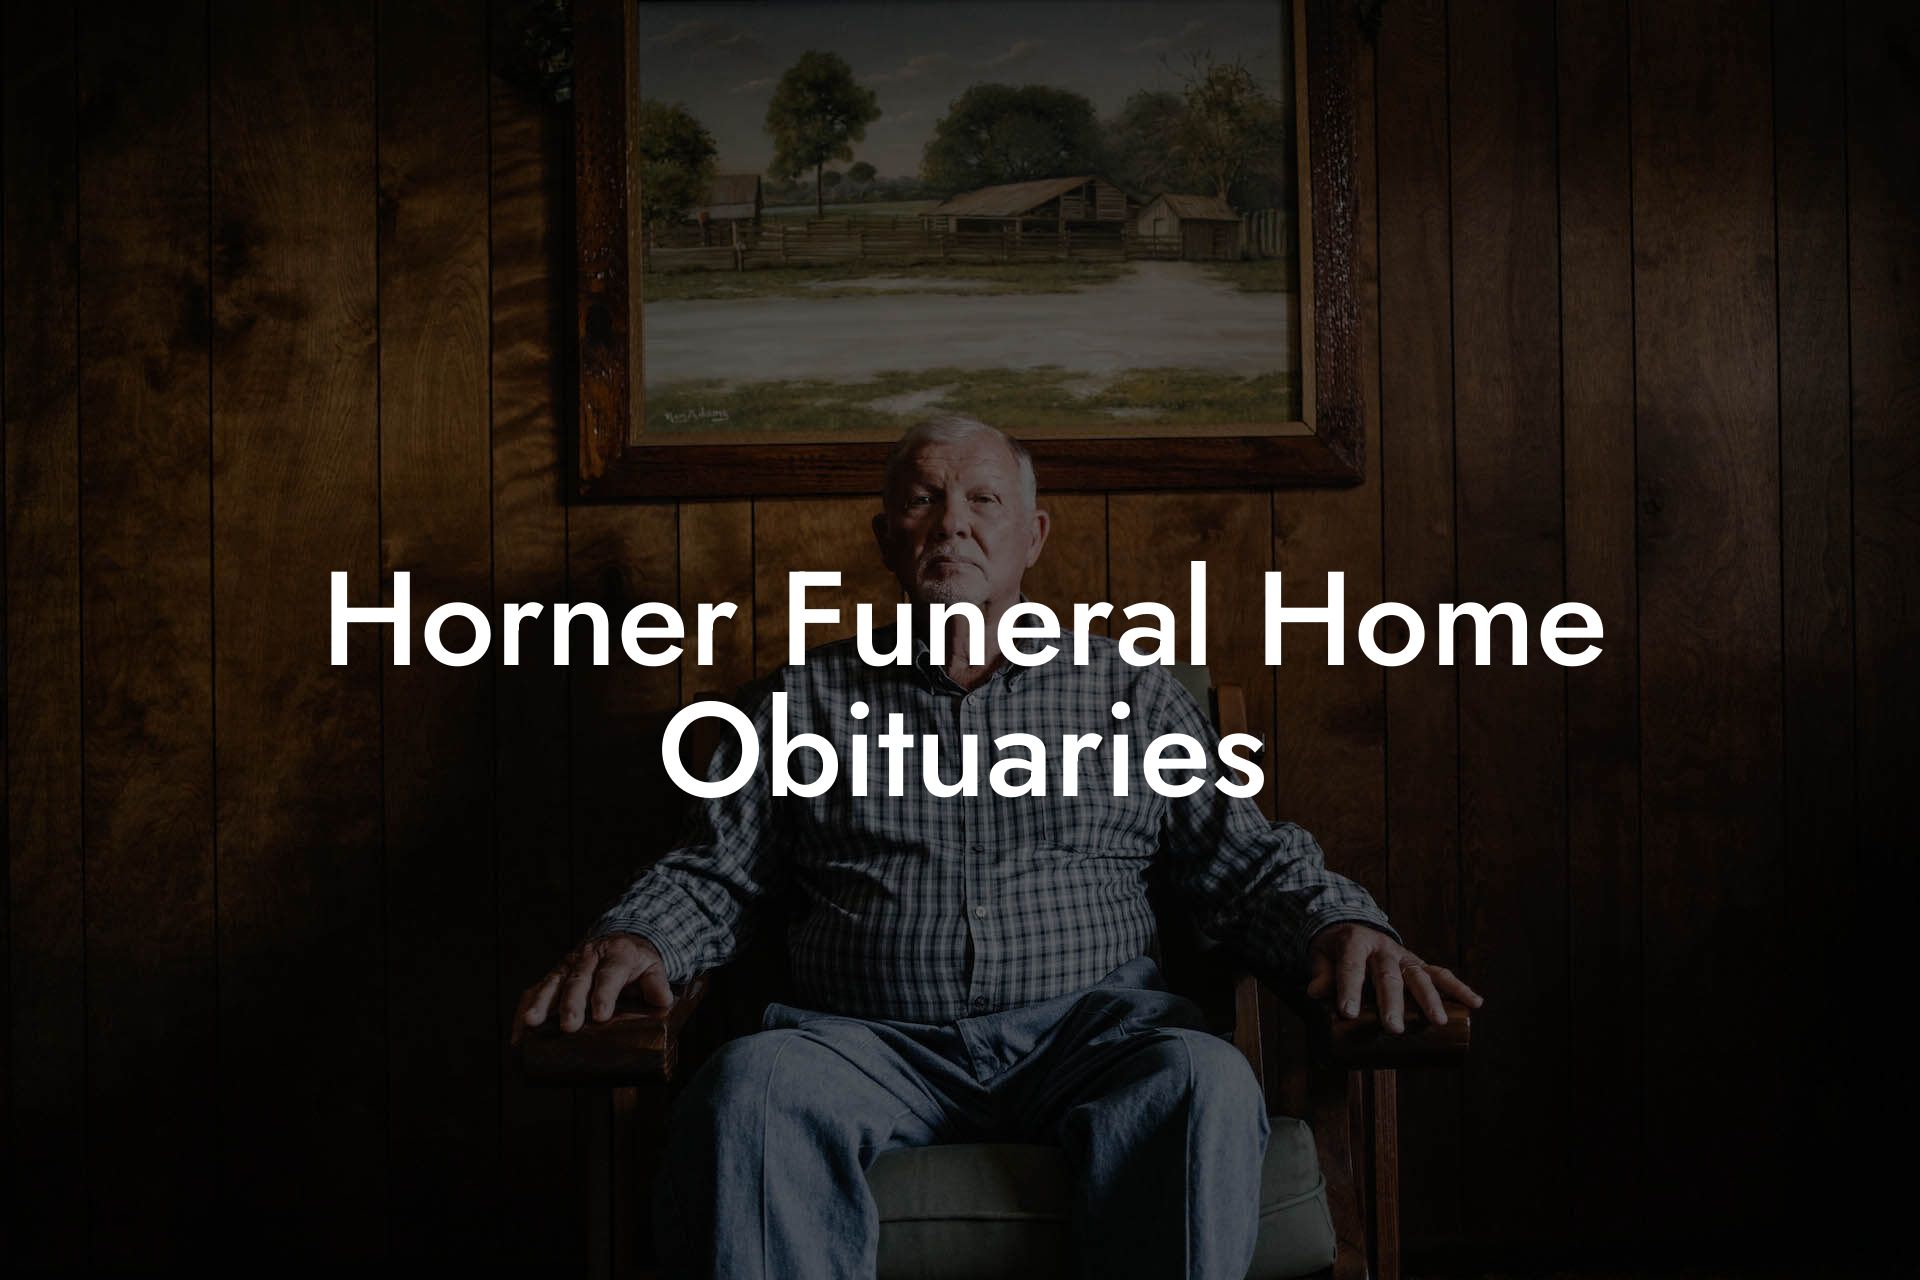 Horner Funeral Home Obituaries